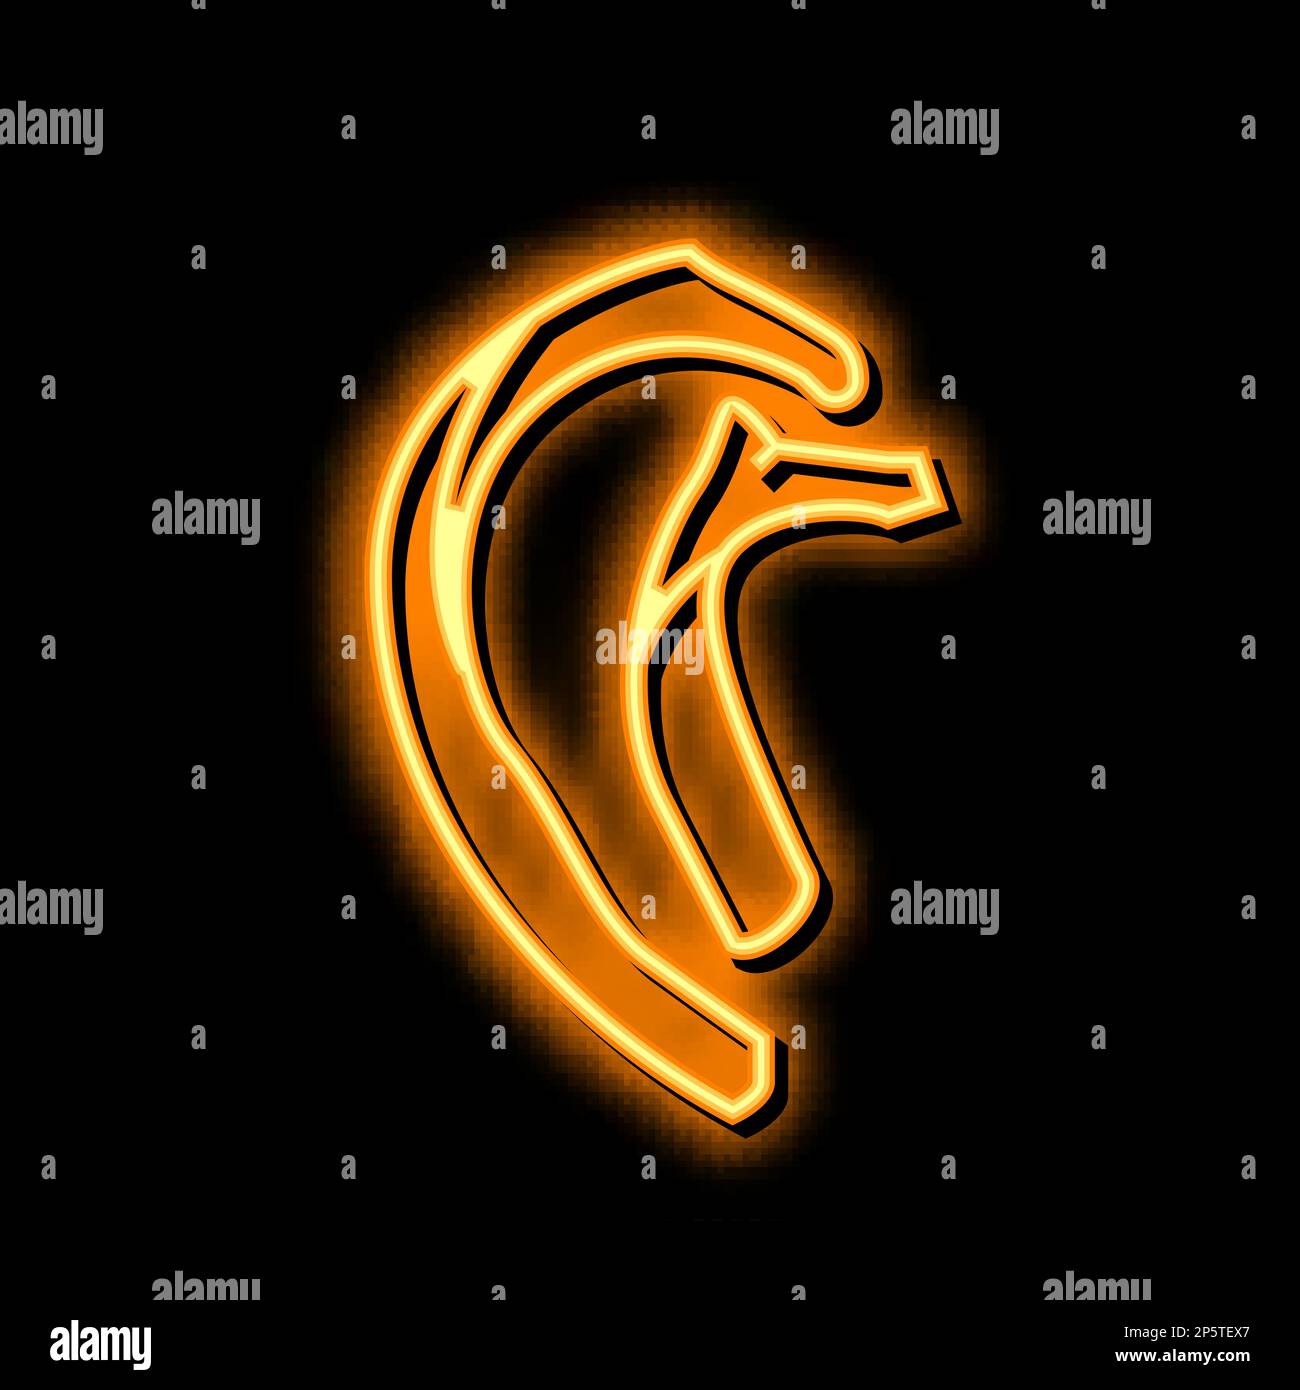 rib bone neon glow icon illustration Stock Vector